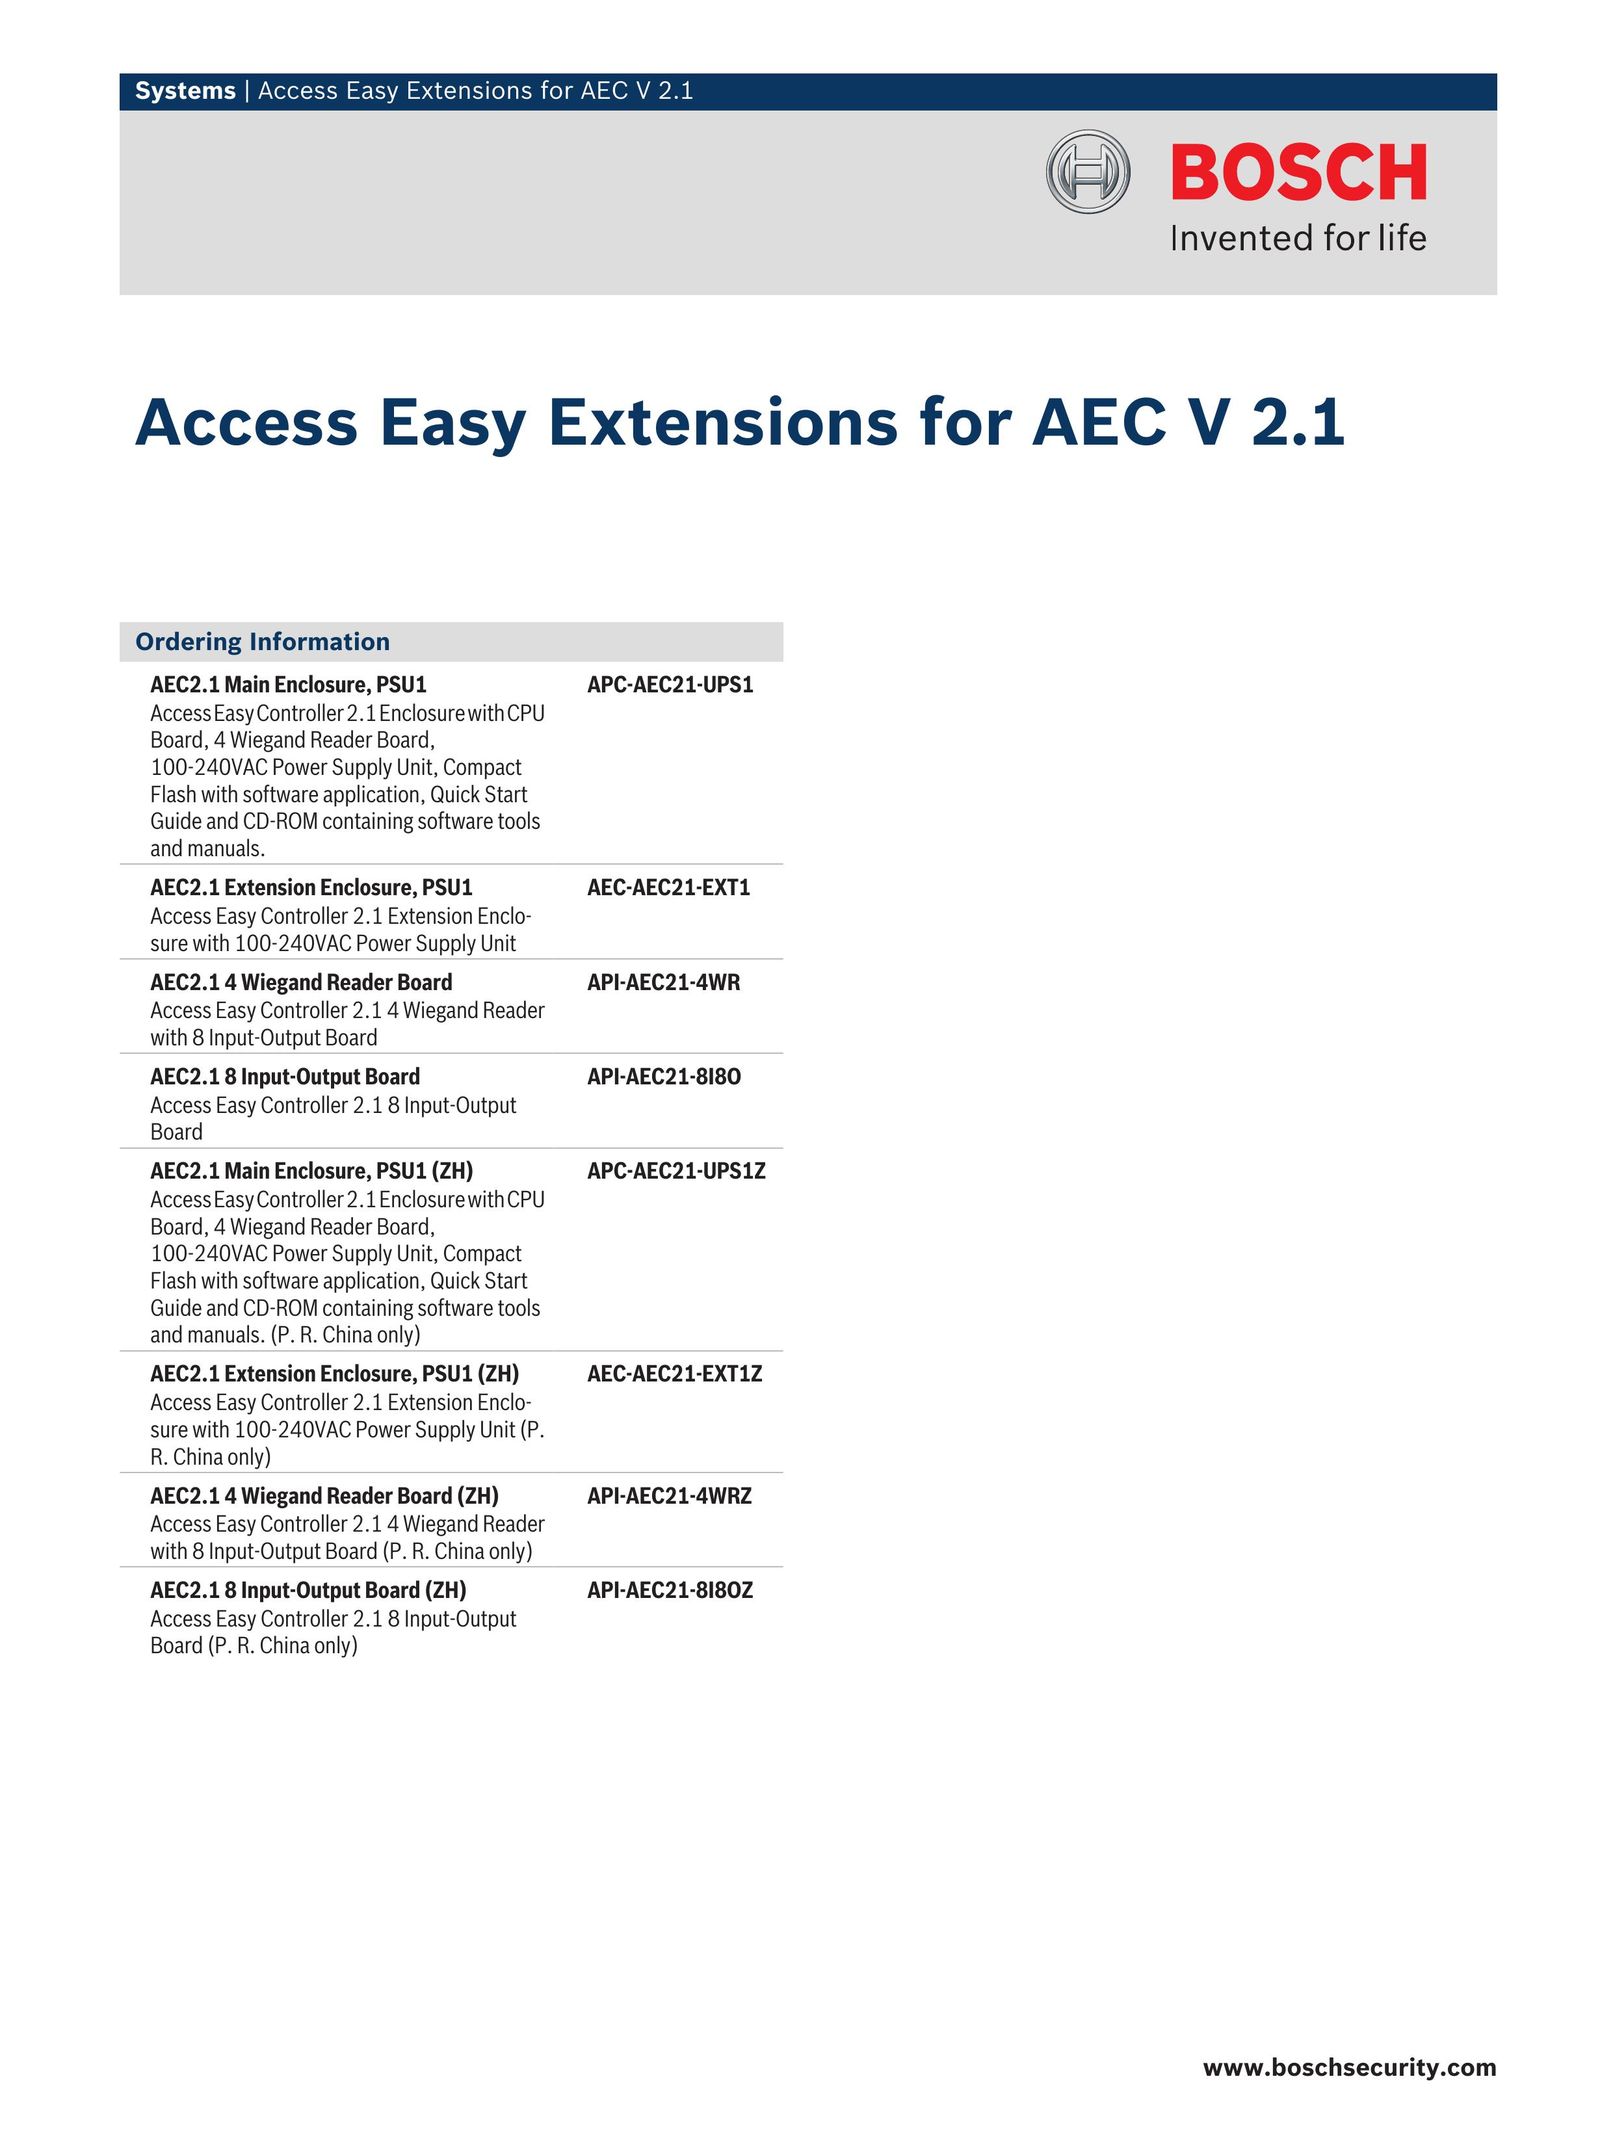 Bosch Appliances APC-AEC21-UPS1 Home Security System User Manual